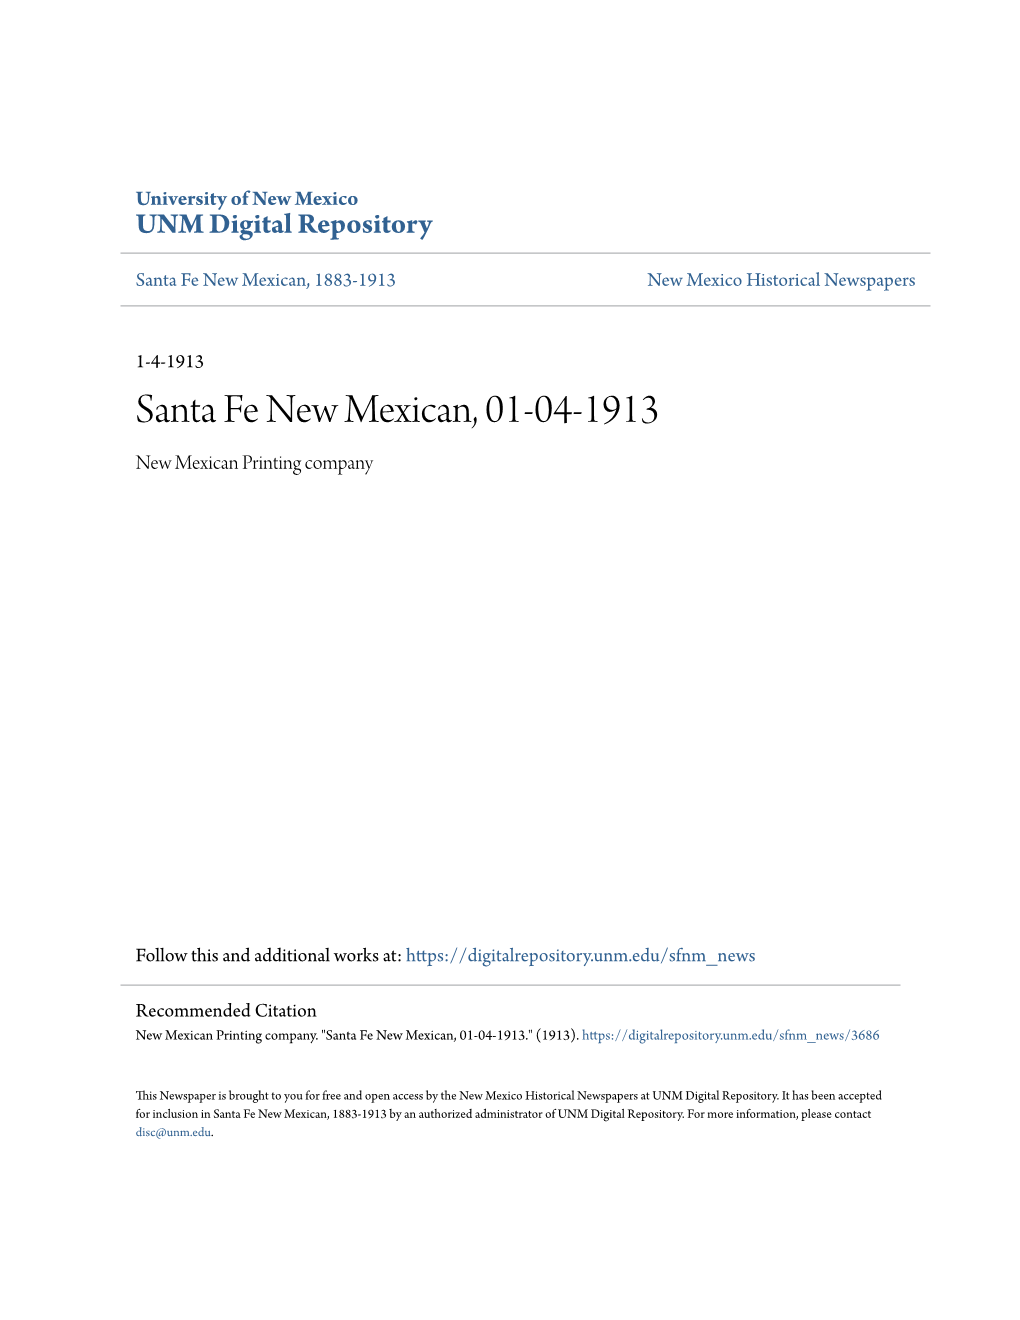 Santa Fe New Mexican, 01-04-1913 New Mexican Printing Company